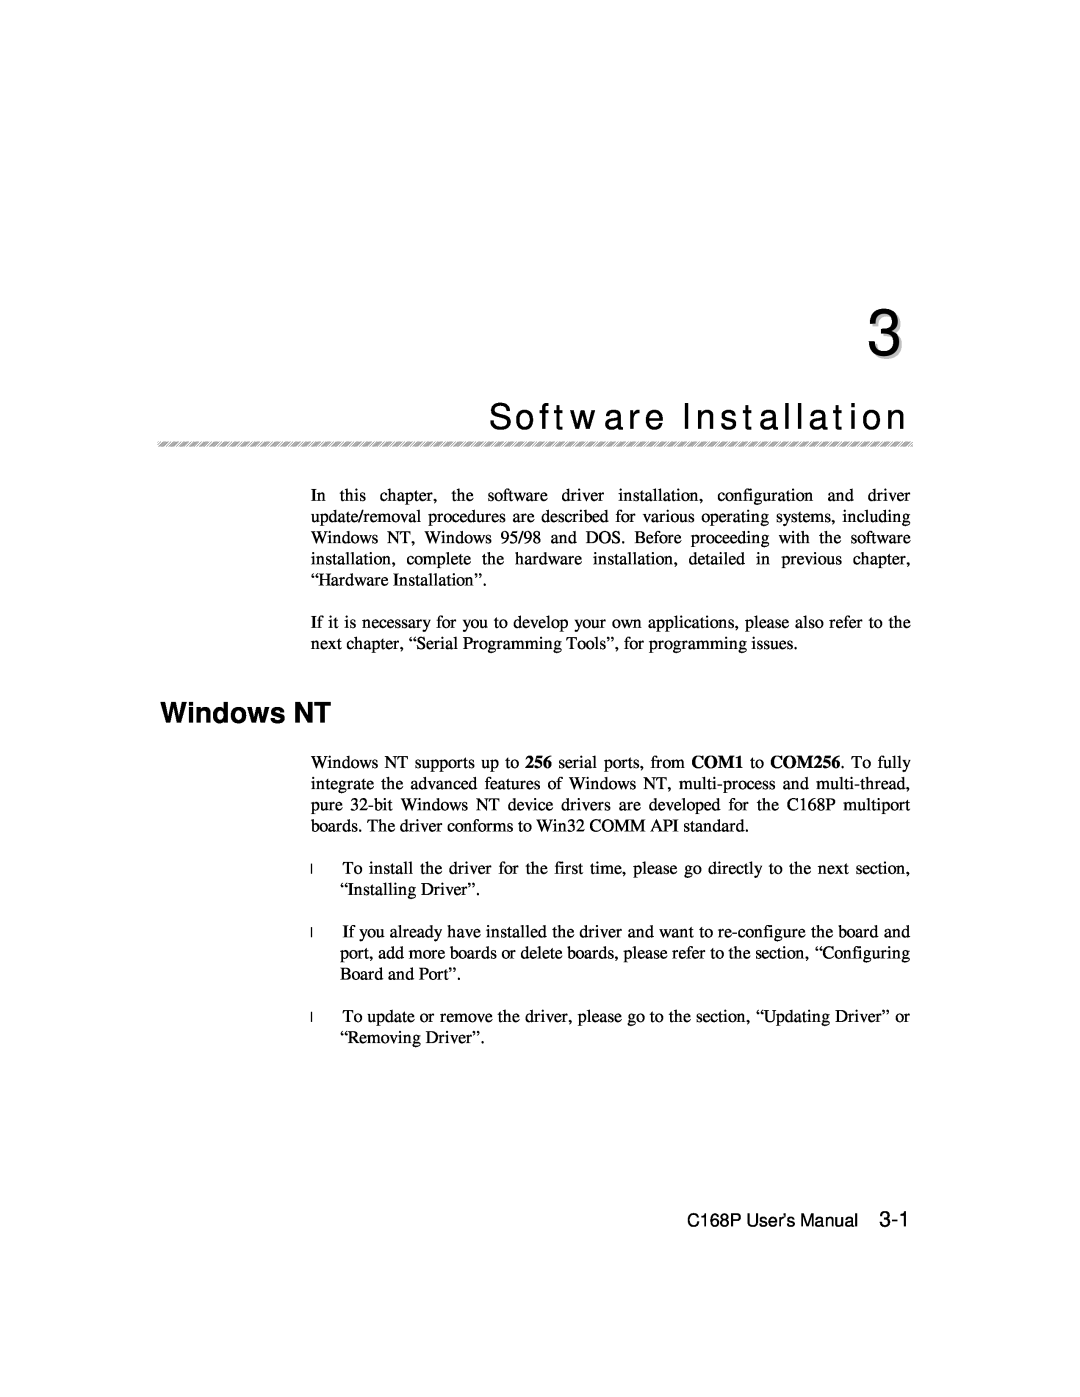 Moxa Technologies C168P user manual Software Installation, Windows NT 